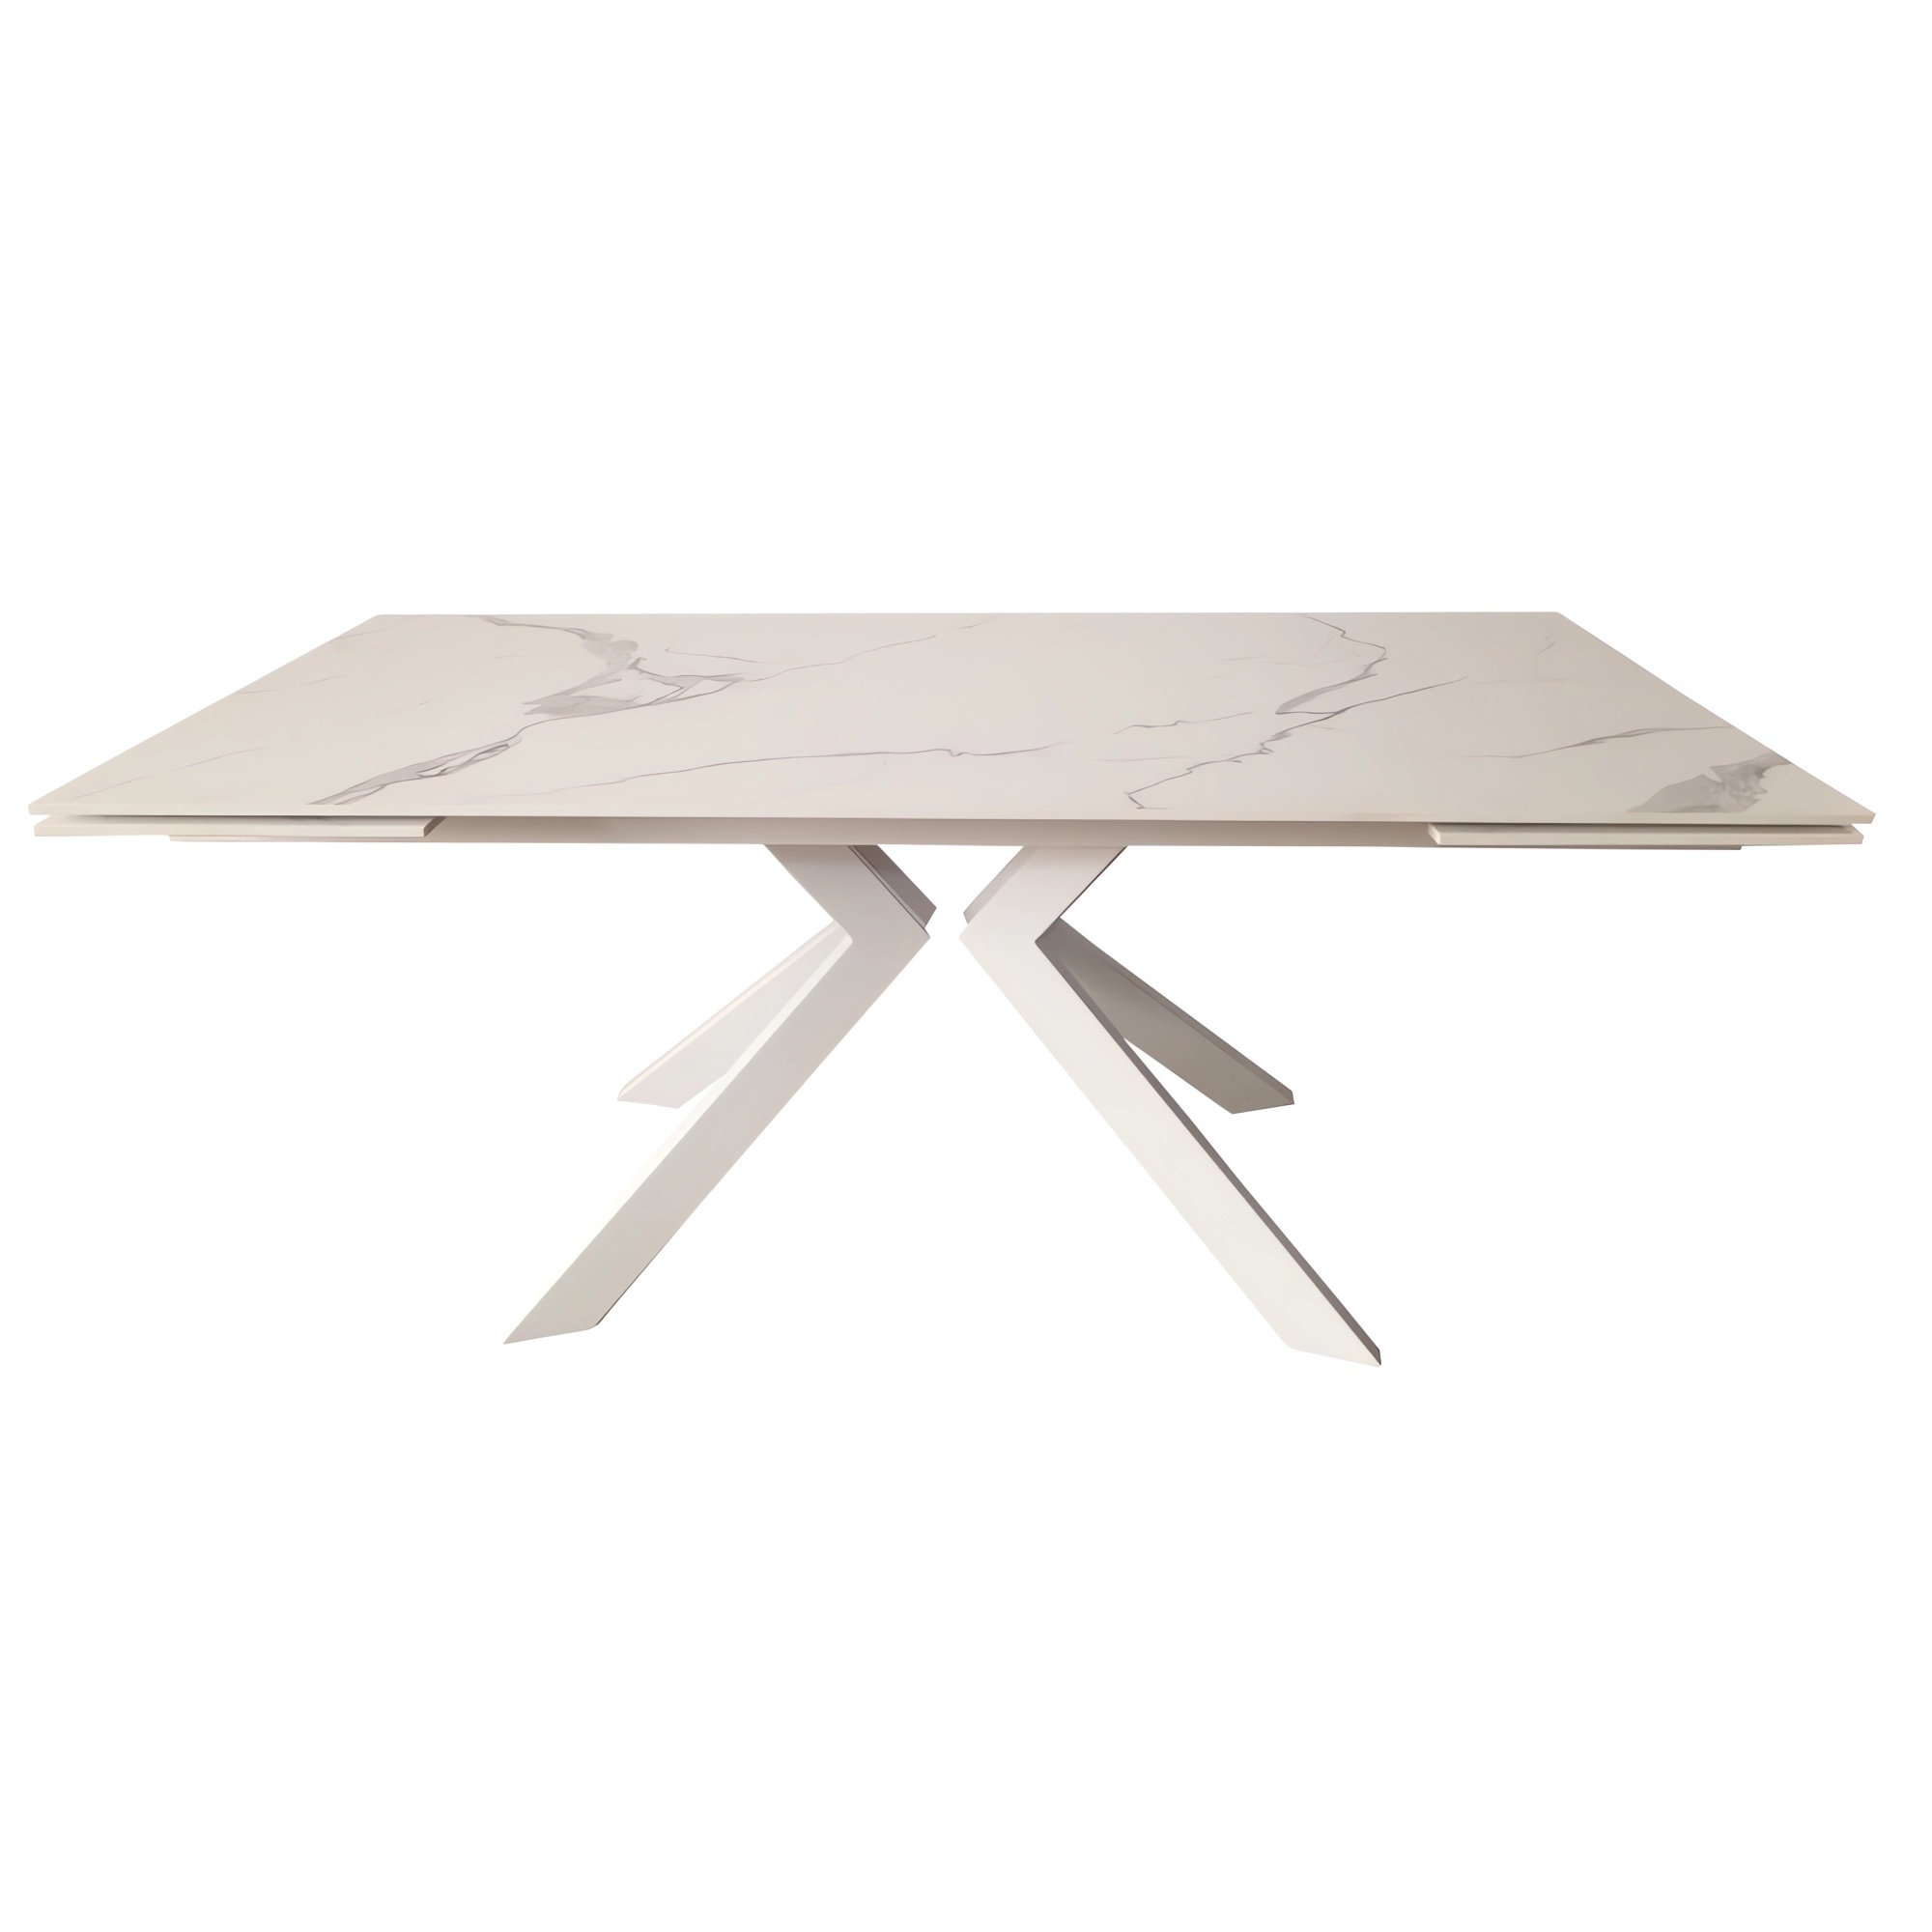 Swank Staturario White стол обеденный керамика 180-260 см Concepto